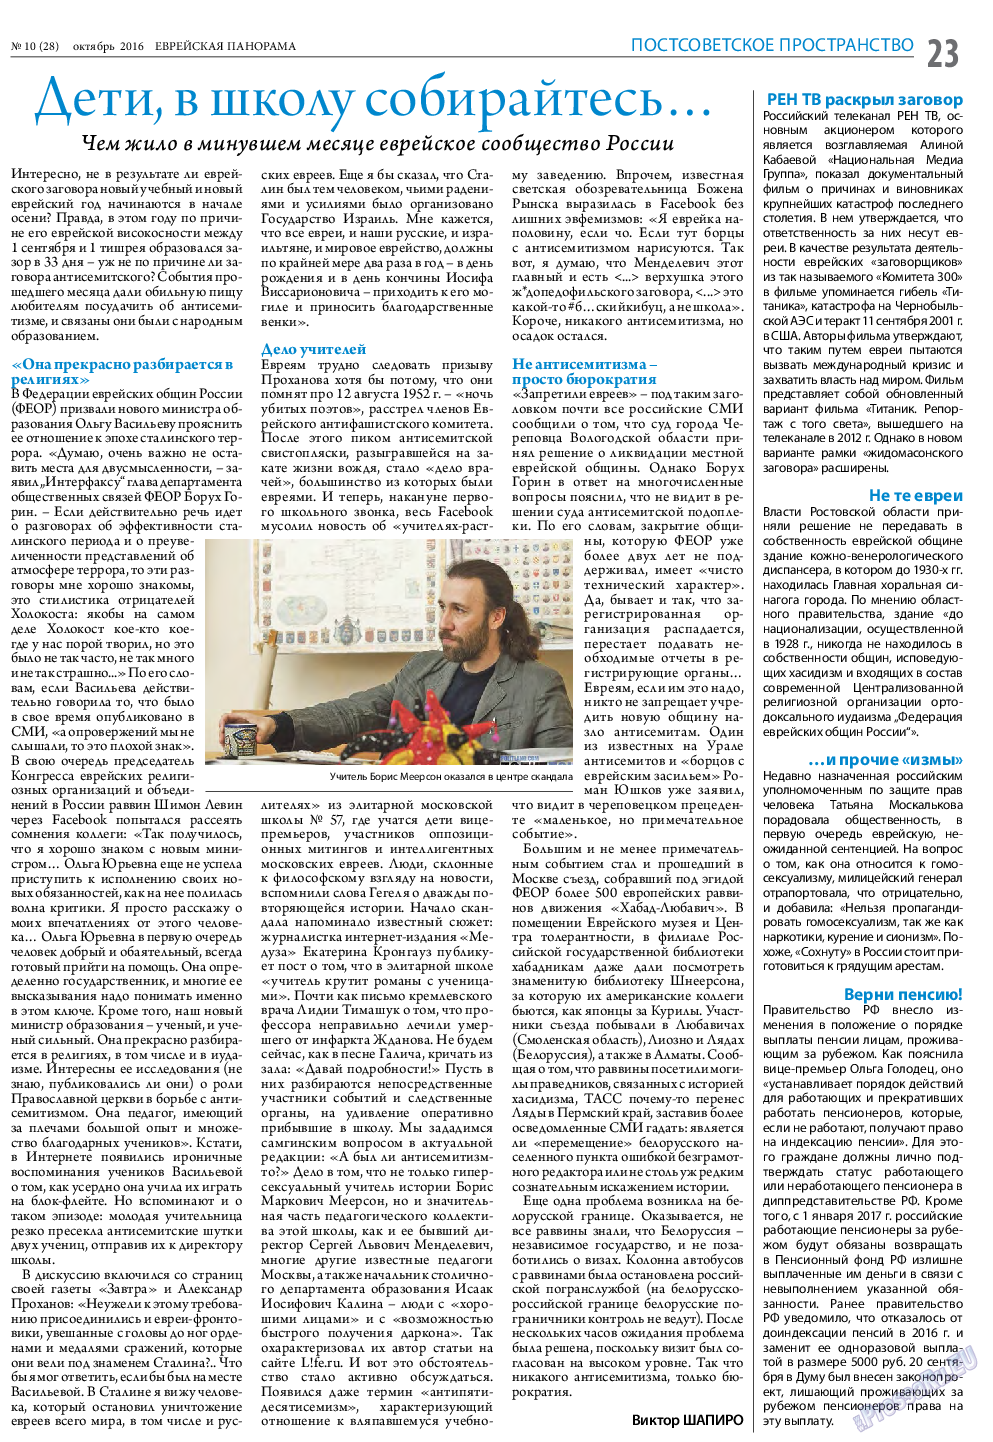 Еврейская панорама, газета. 2016 №10 стр.23